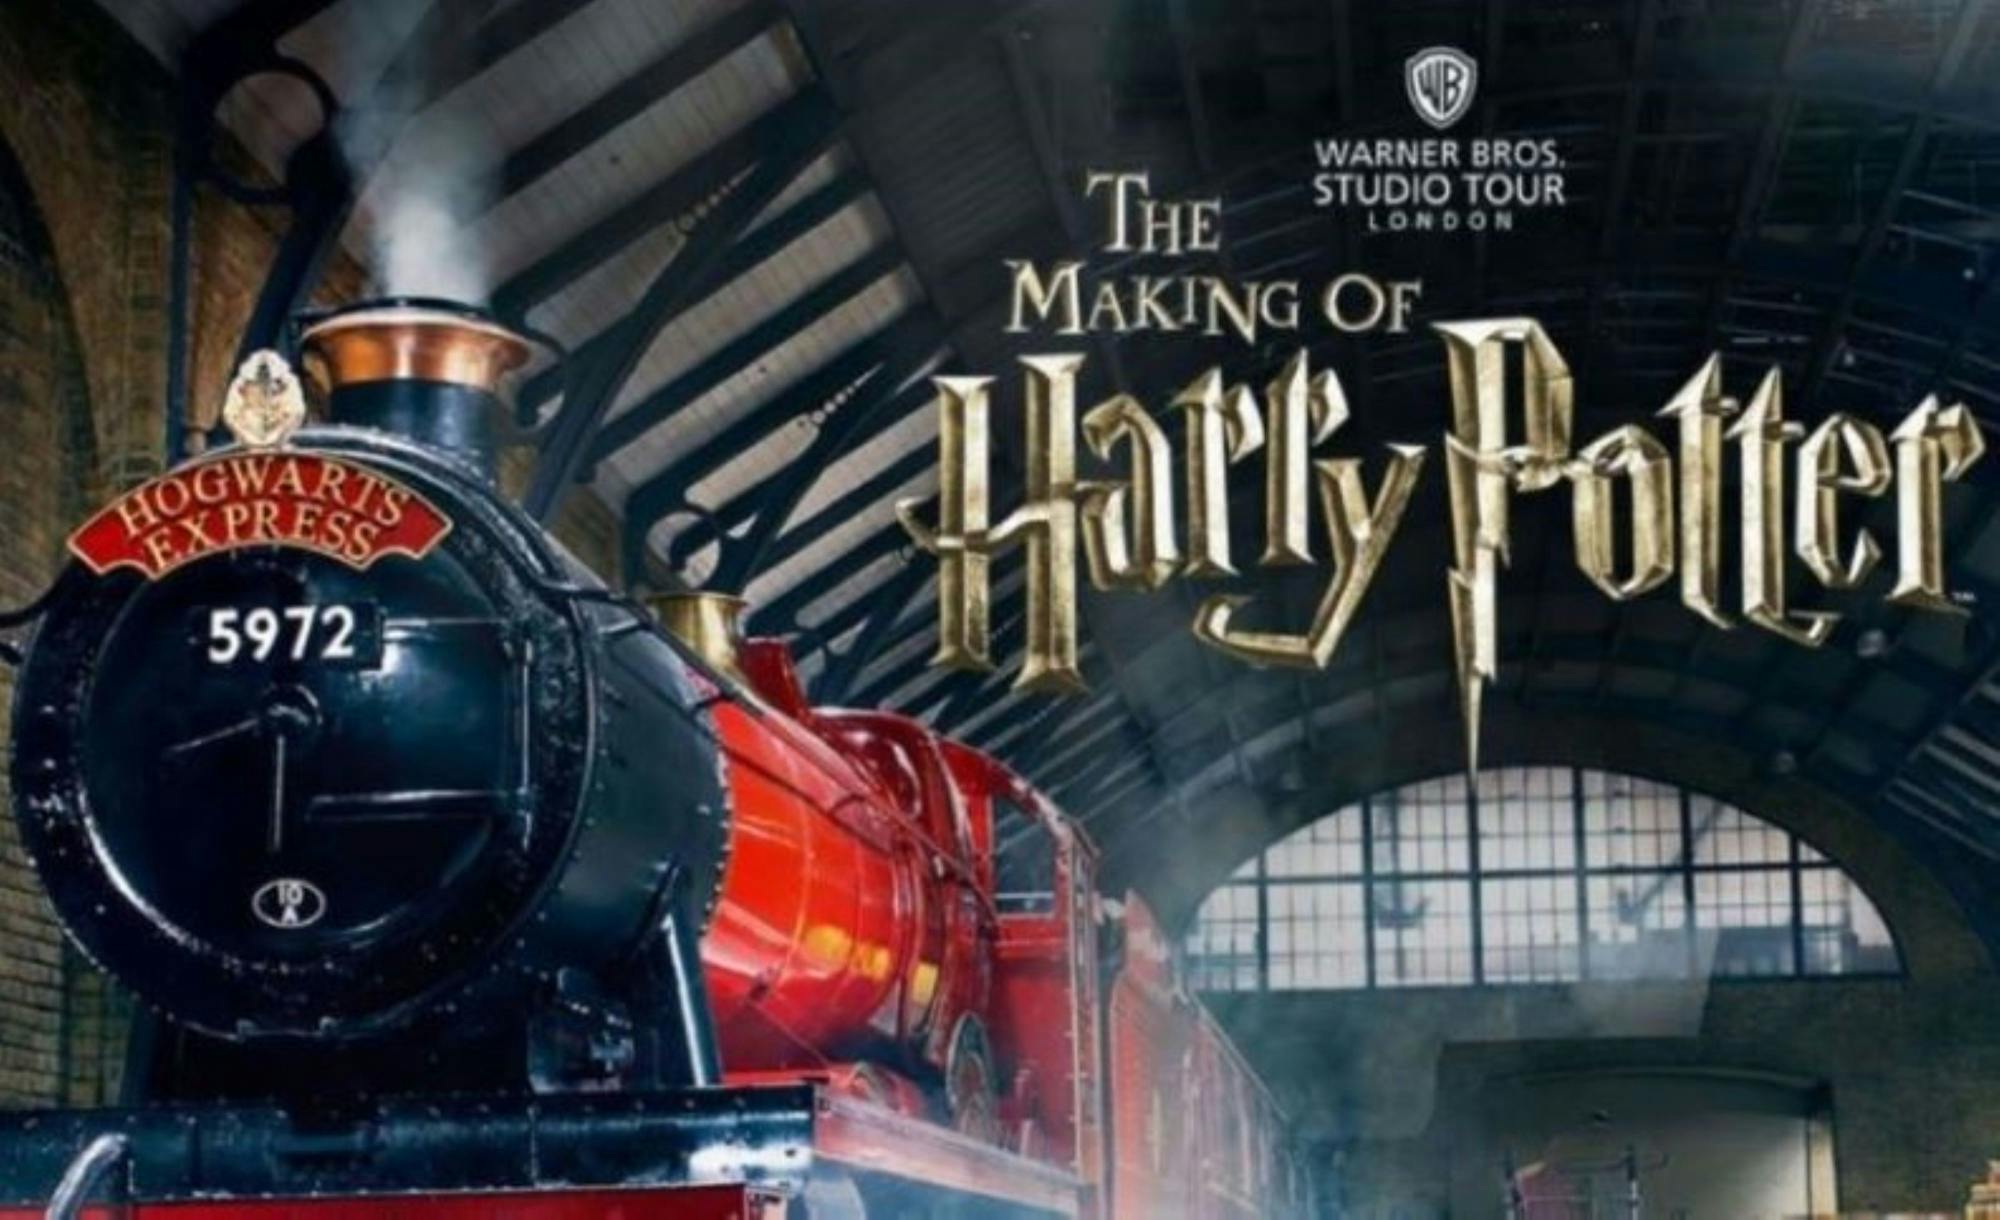 "The Making of Harry Potter" de Birmingham en clase estándar